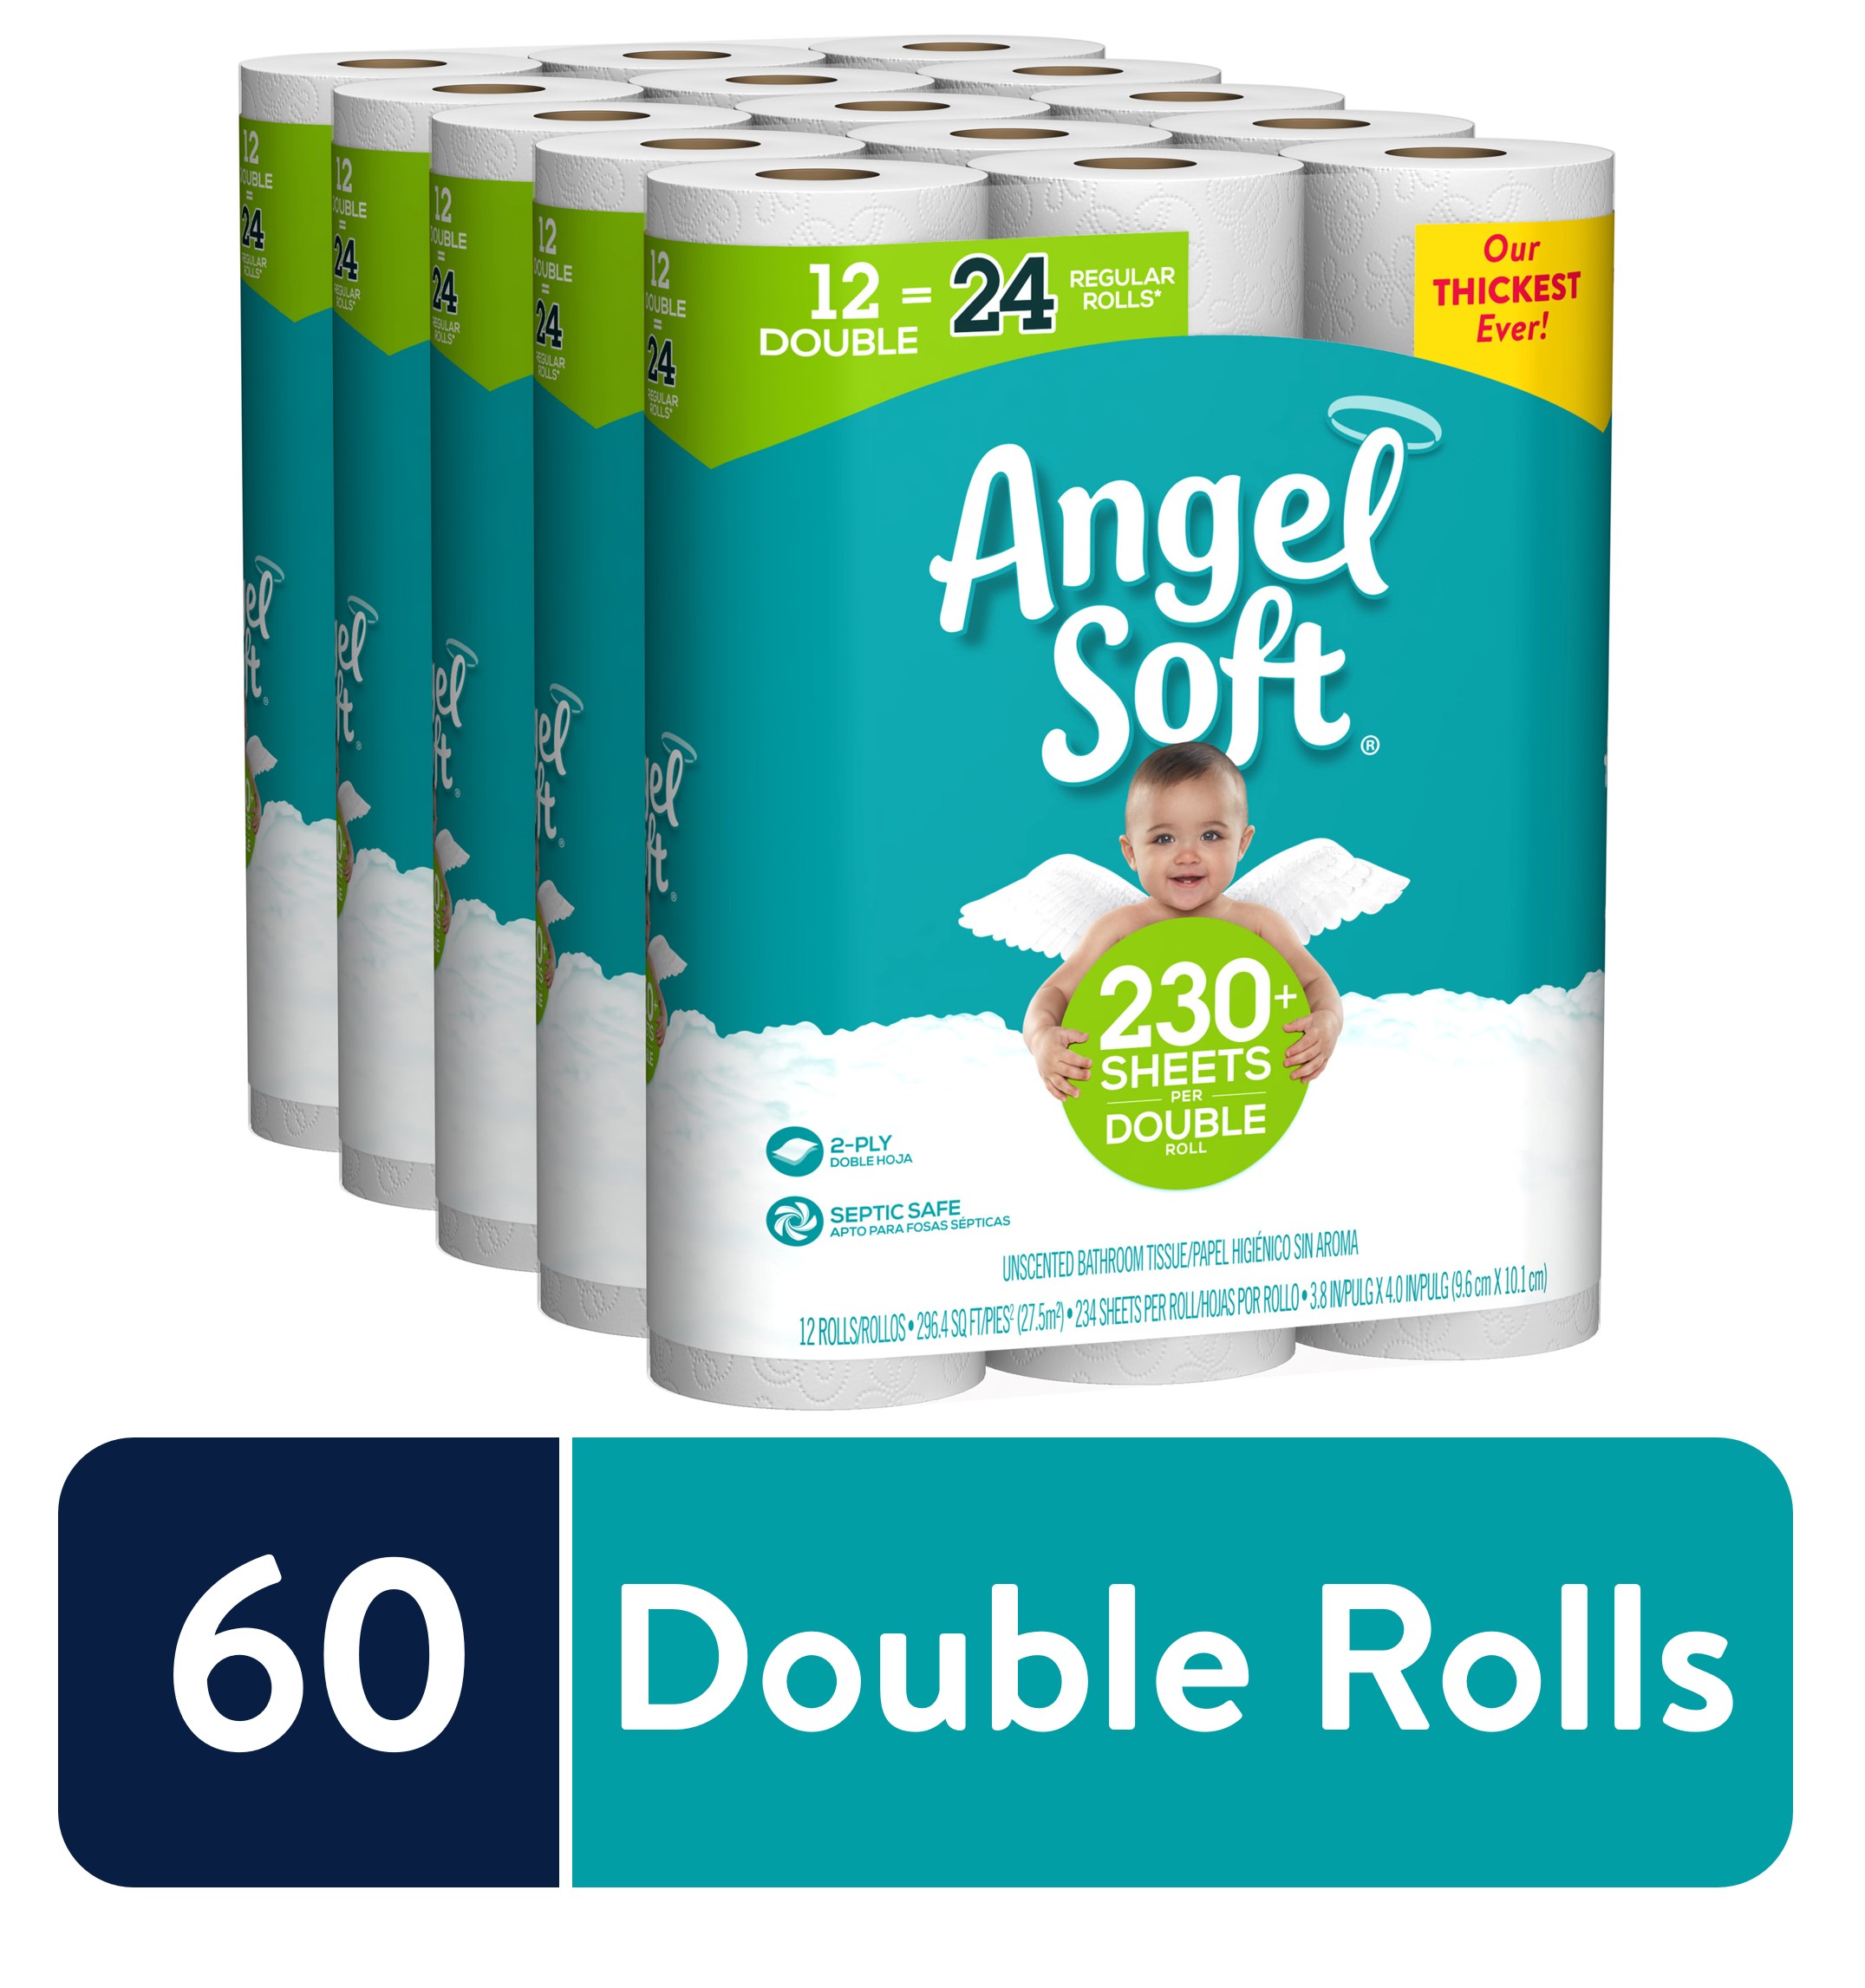 5 PACK Angel Soft Toilet Paper 60 Double Rolls Bath Tissue 120 Regular Rolls 